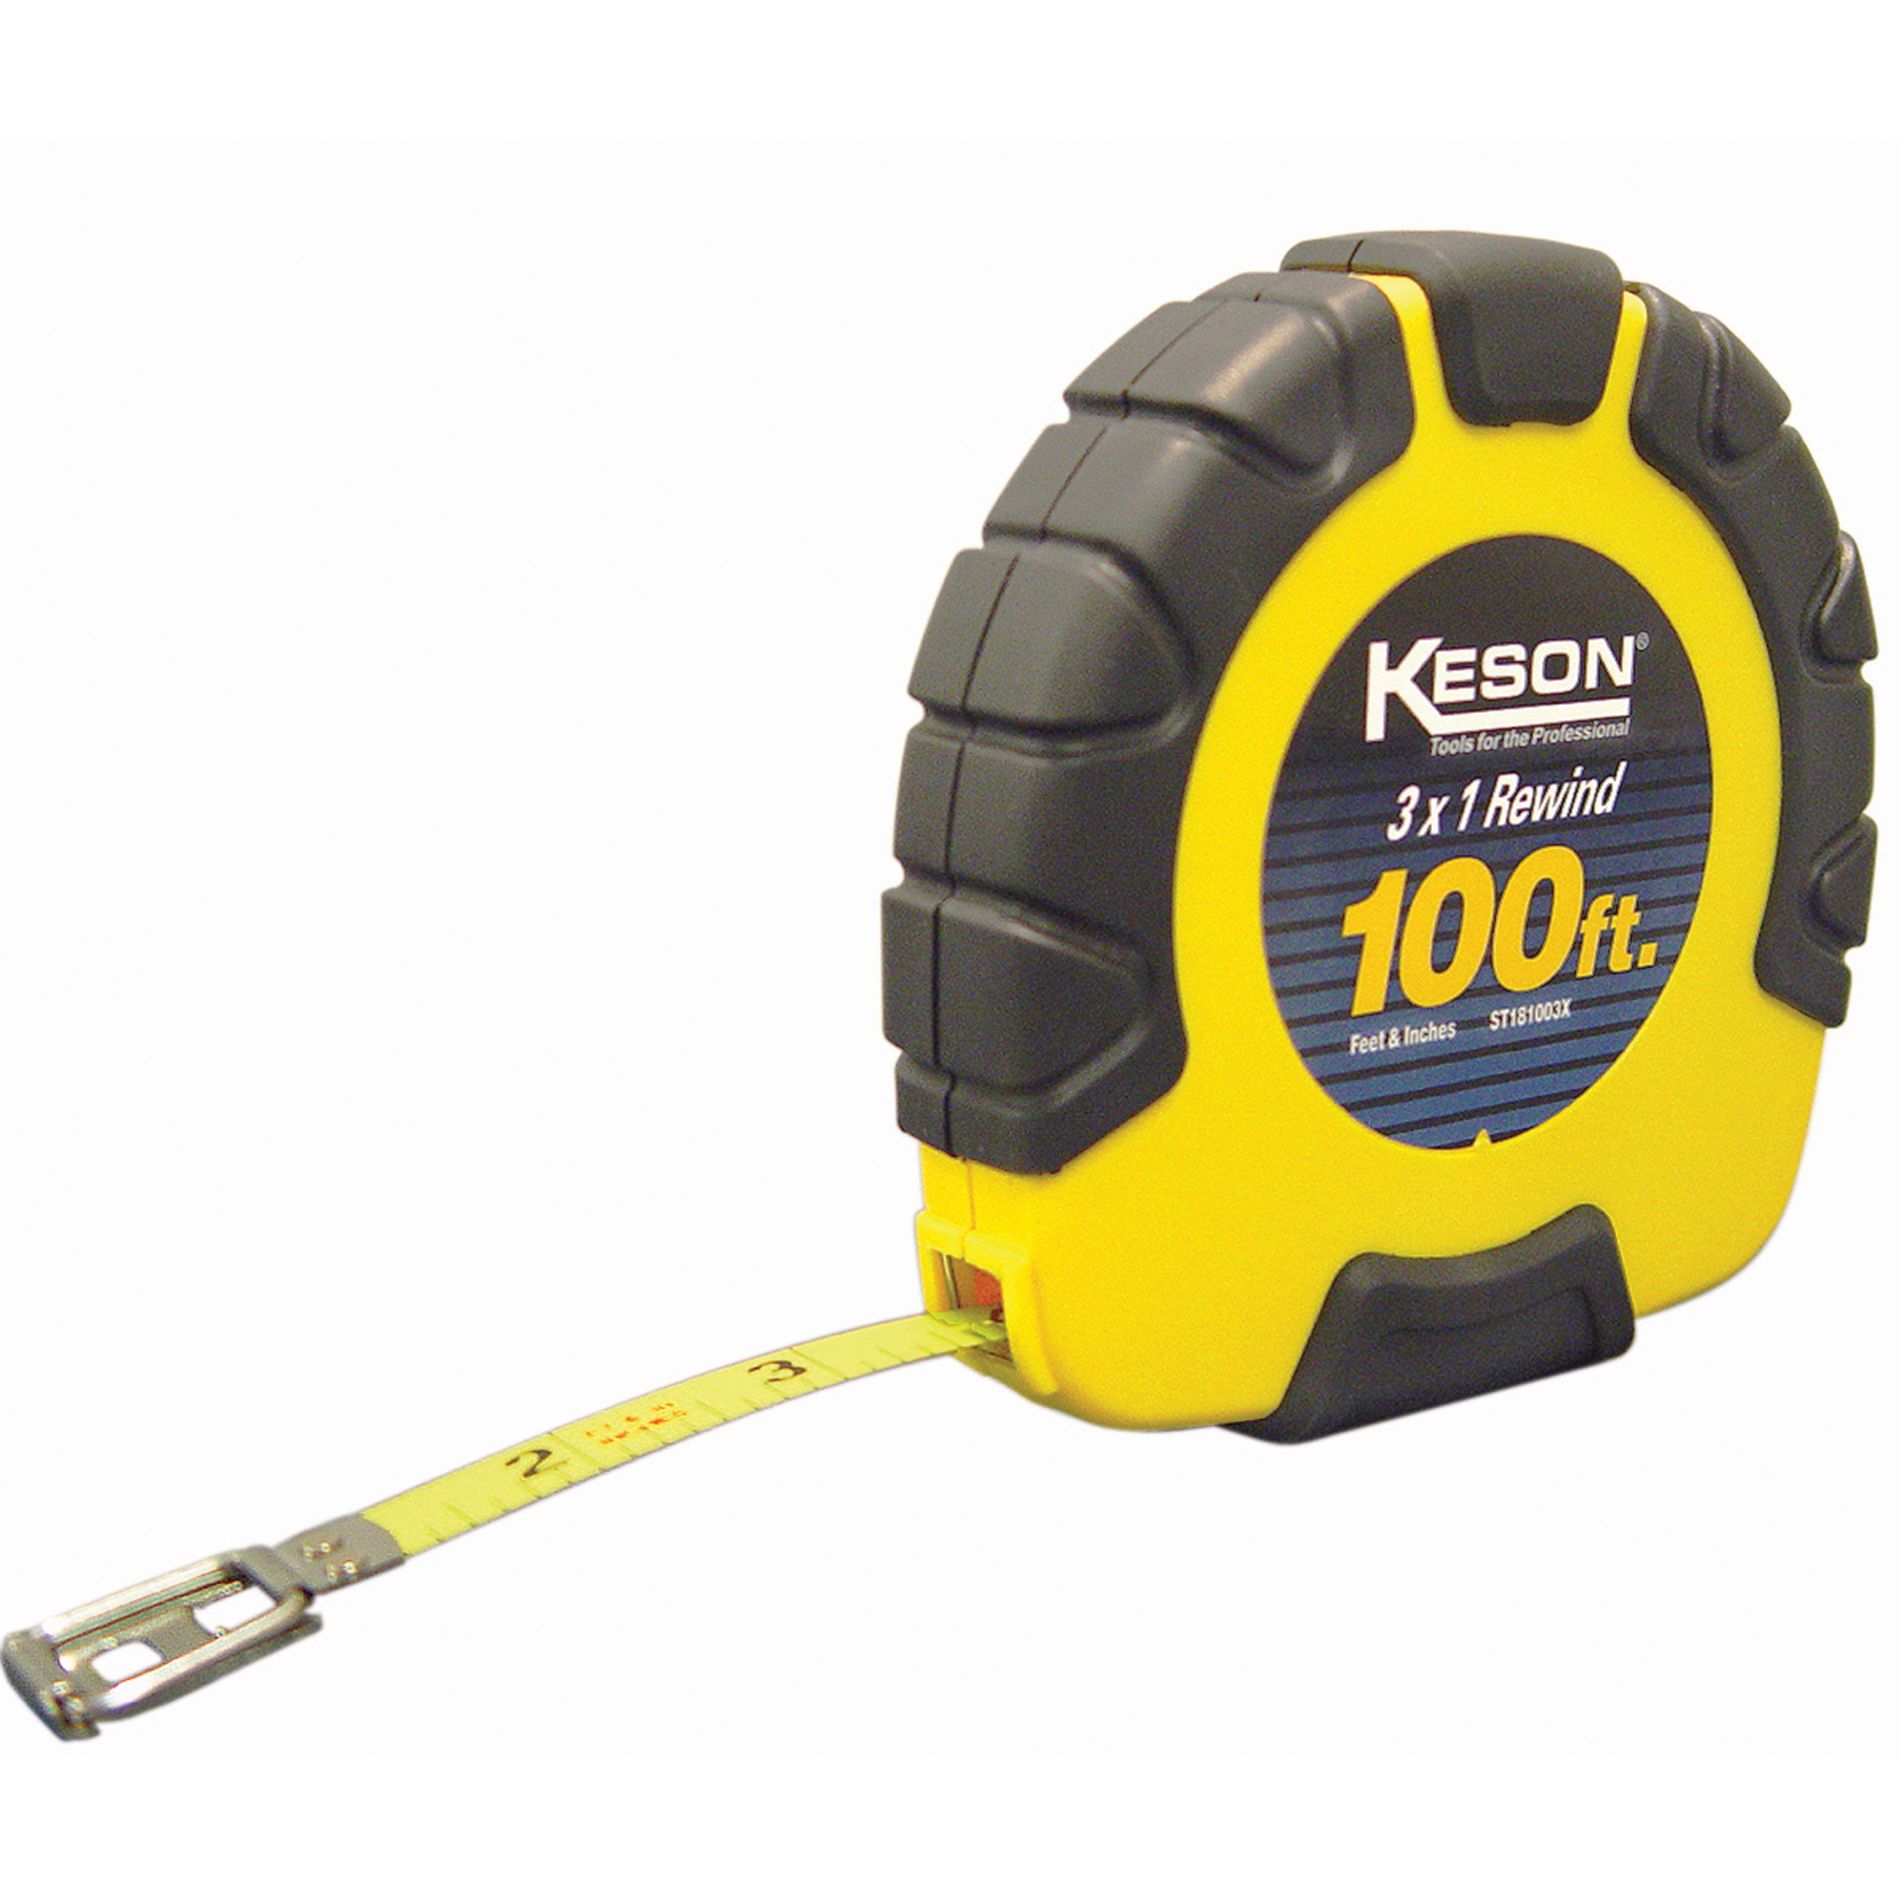 Keson Steel Measuring Tape